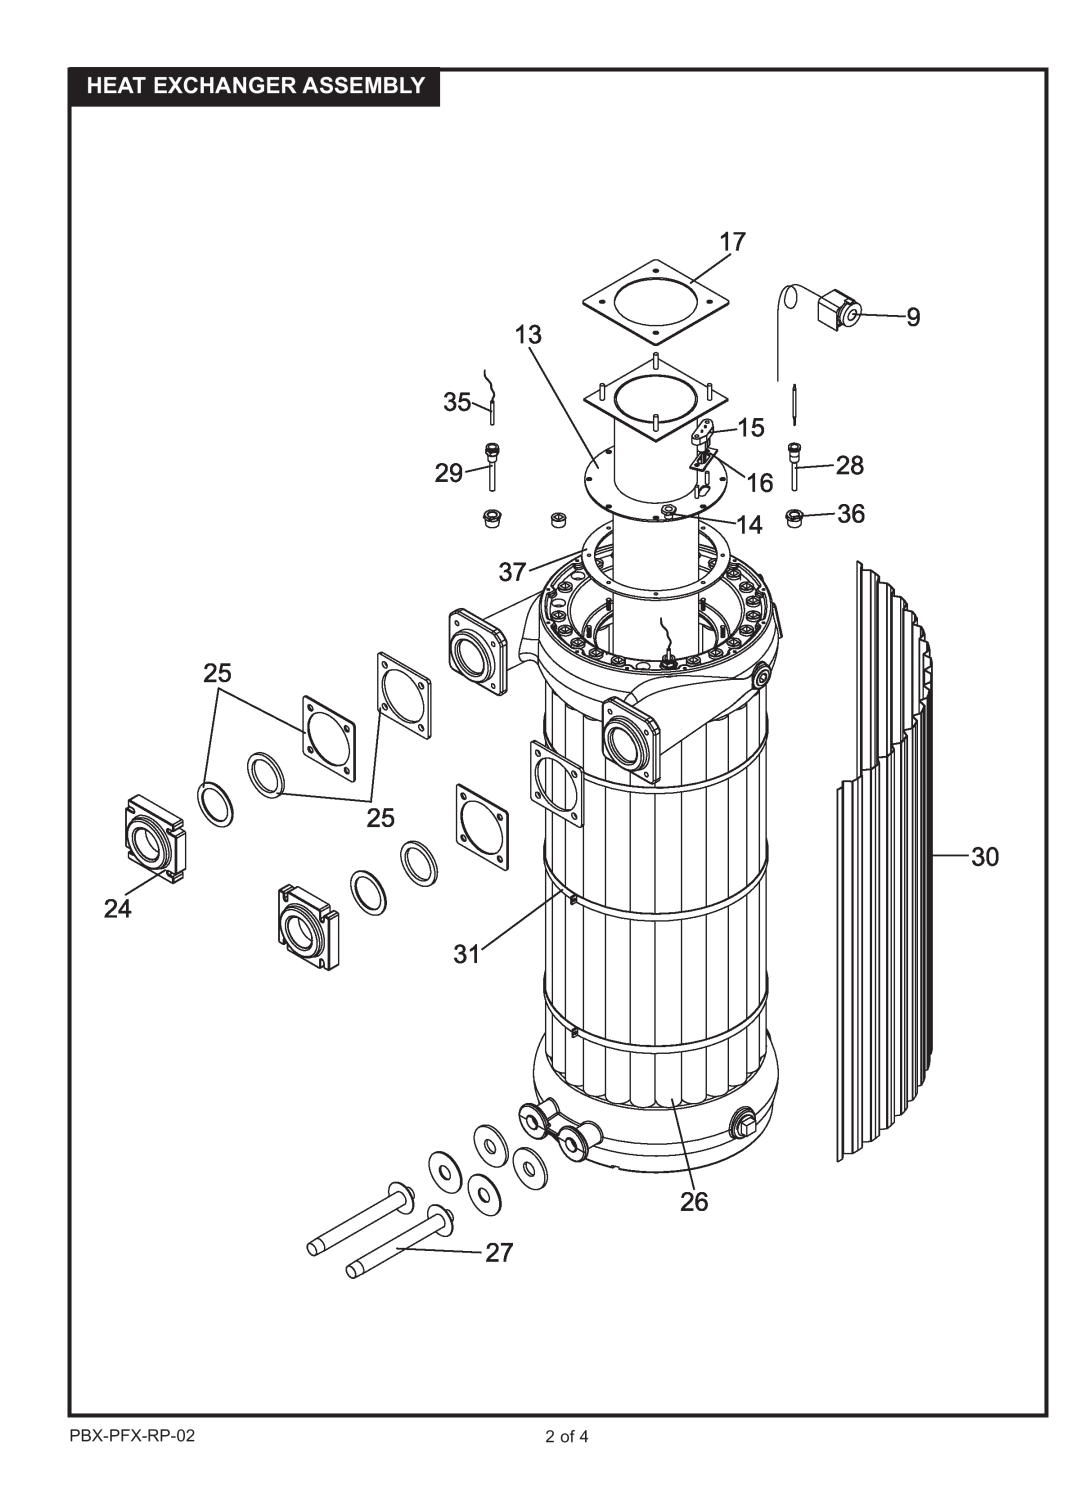 Lochinvar PB/PF 1501, 2001, 1701 manual Heat Exchanger Assembly, PBX-PFX-RP-02, 2 of 